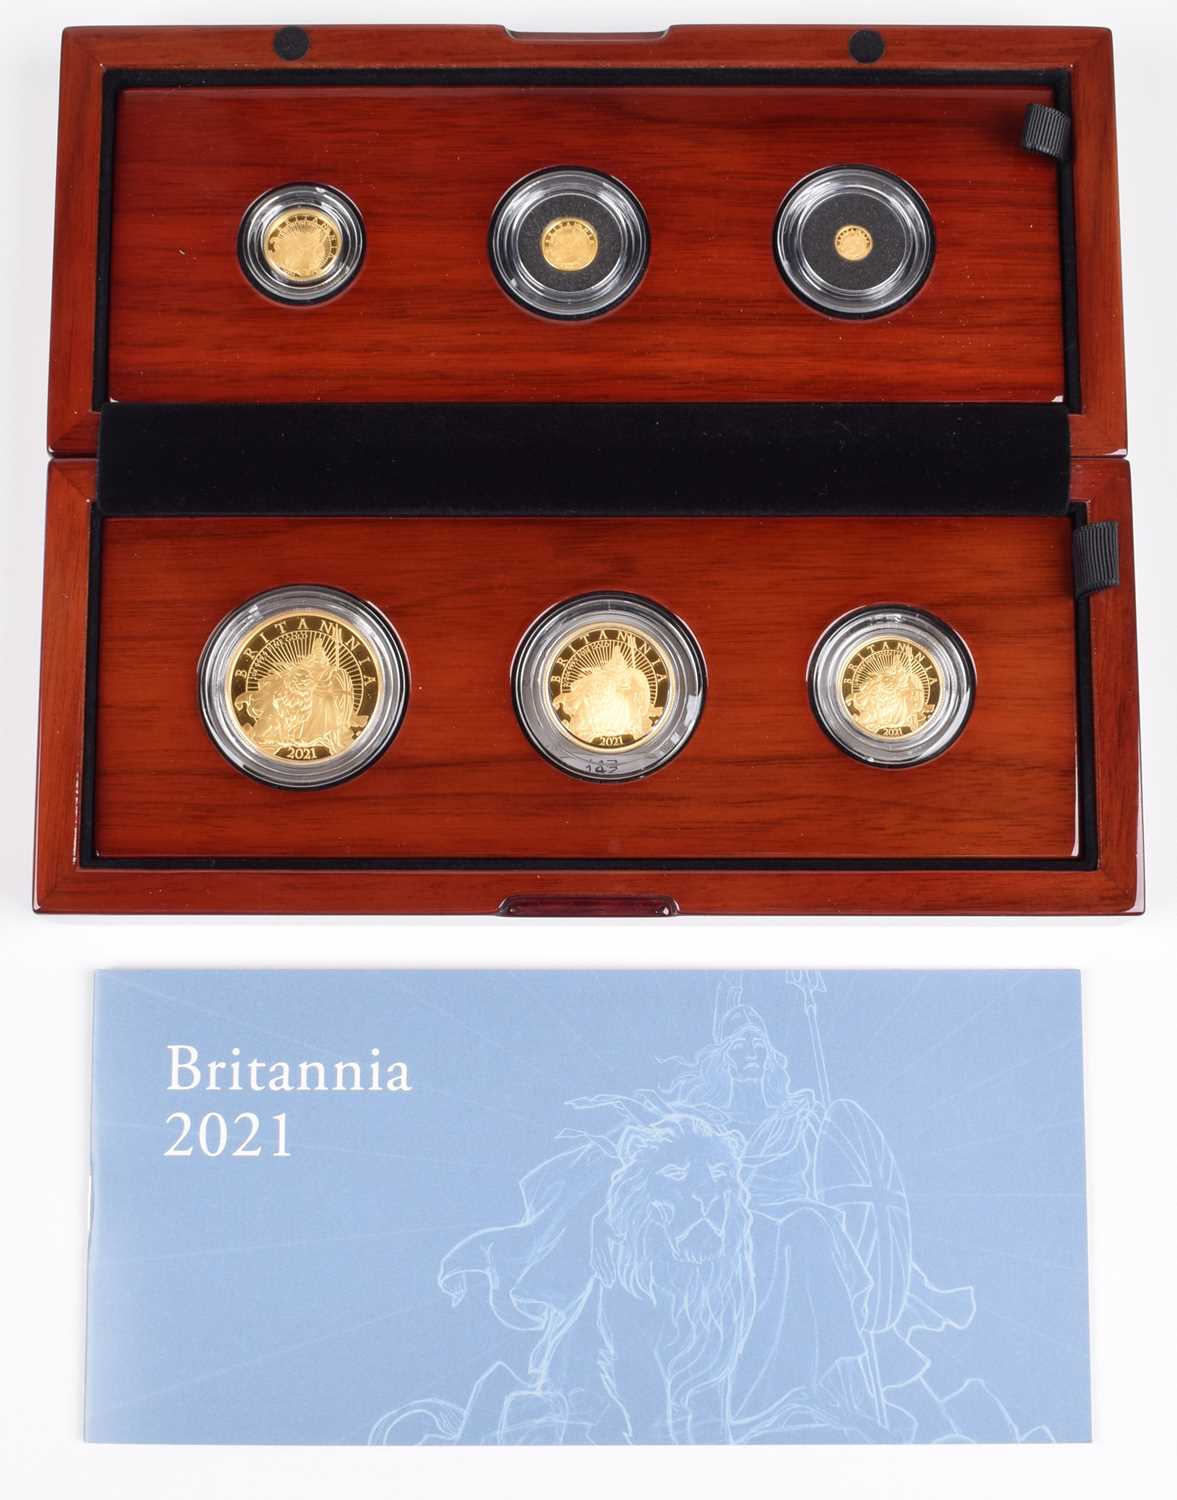 Lot 48 - Elizabeth II, United Kingdom, 2021, The Britannia Six-Coin Gold Proof Set, Royal Mint.